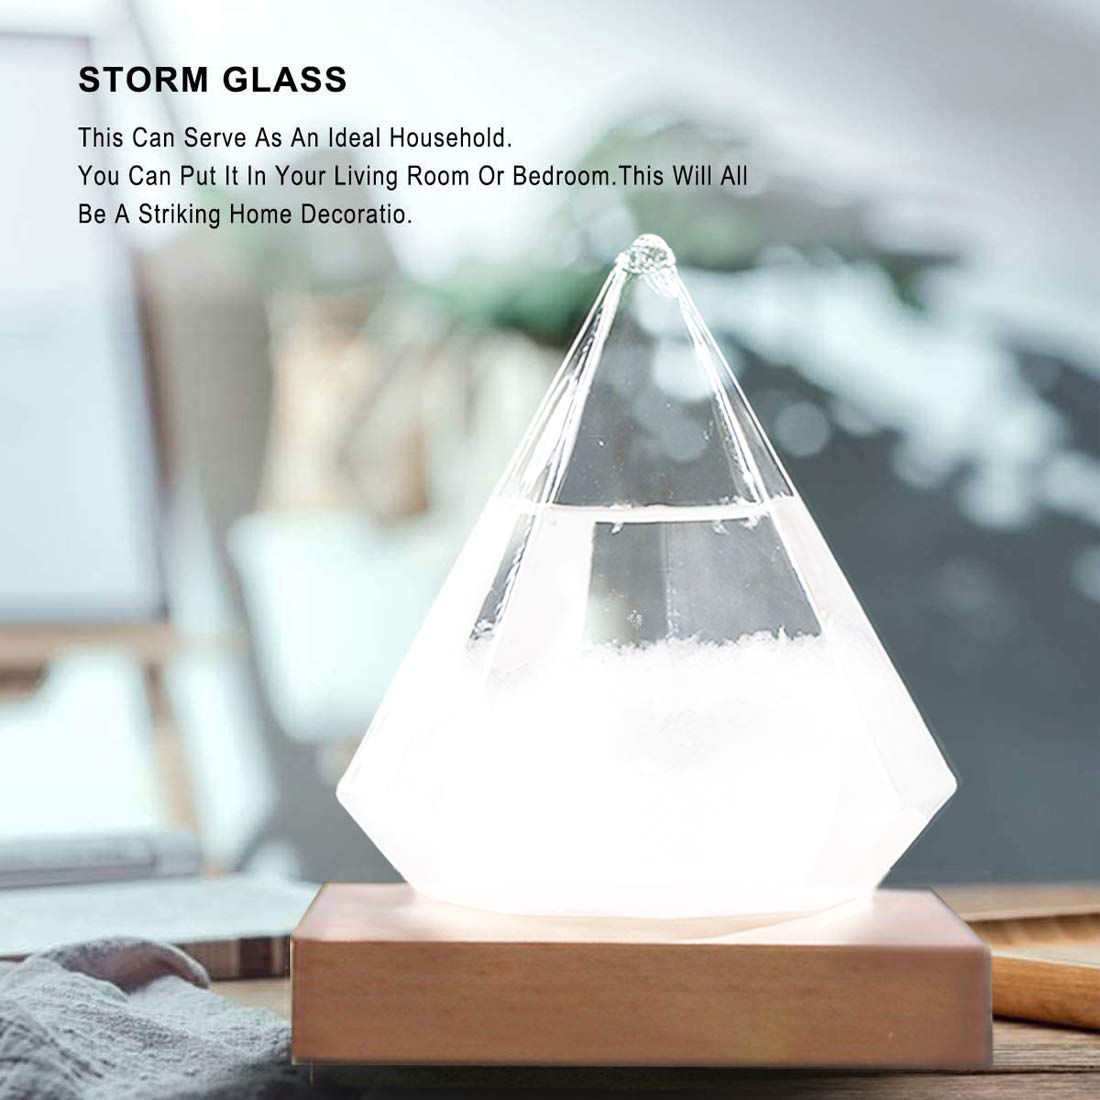 Weather Storm Glass Bottle Drop Creative Stylish Weather Station Forecaster Barometer, Desktop Decoration Crafts of Choice (Water Droplet+Base)